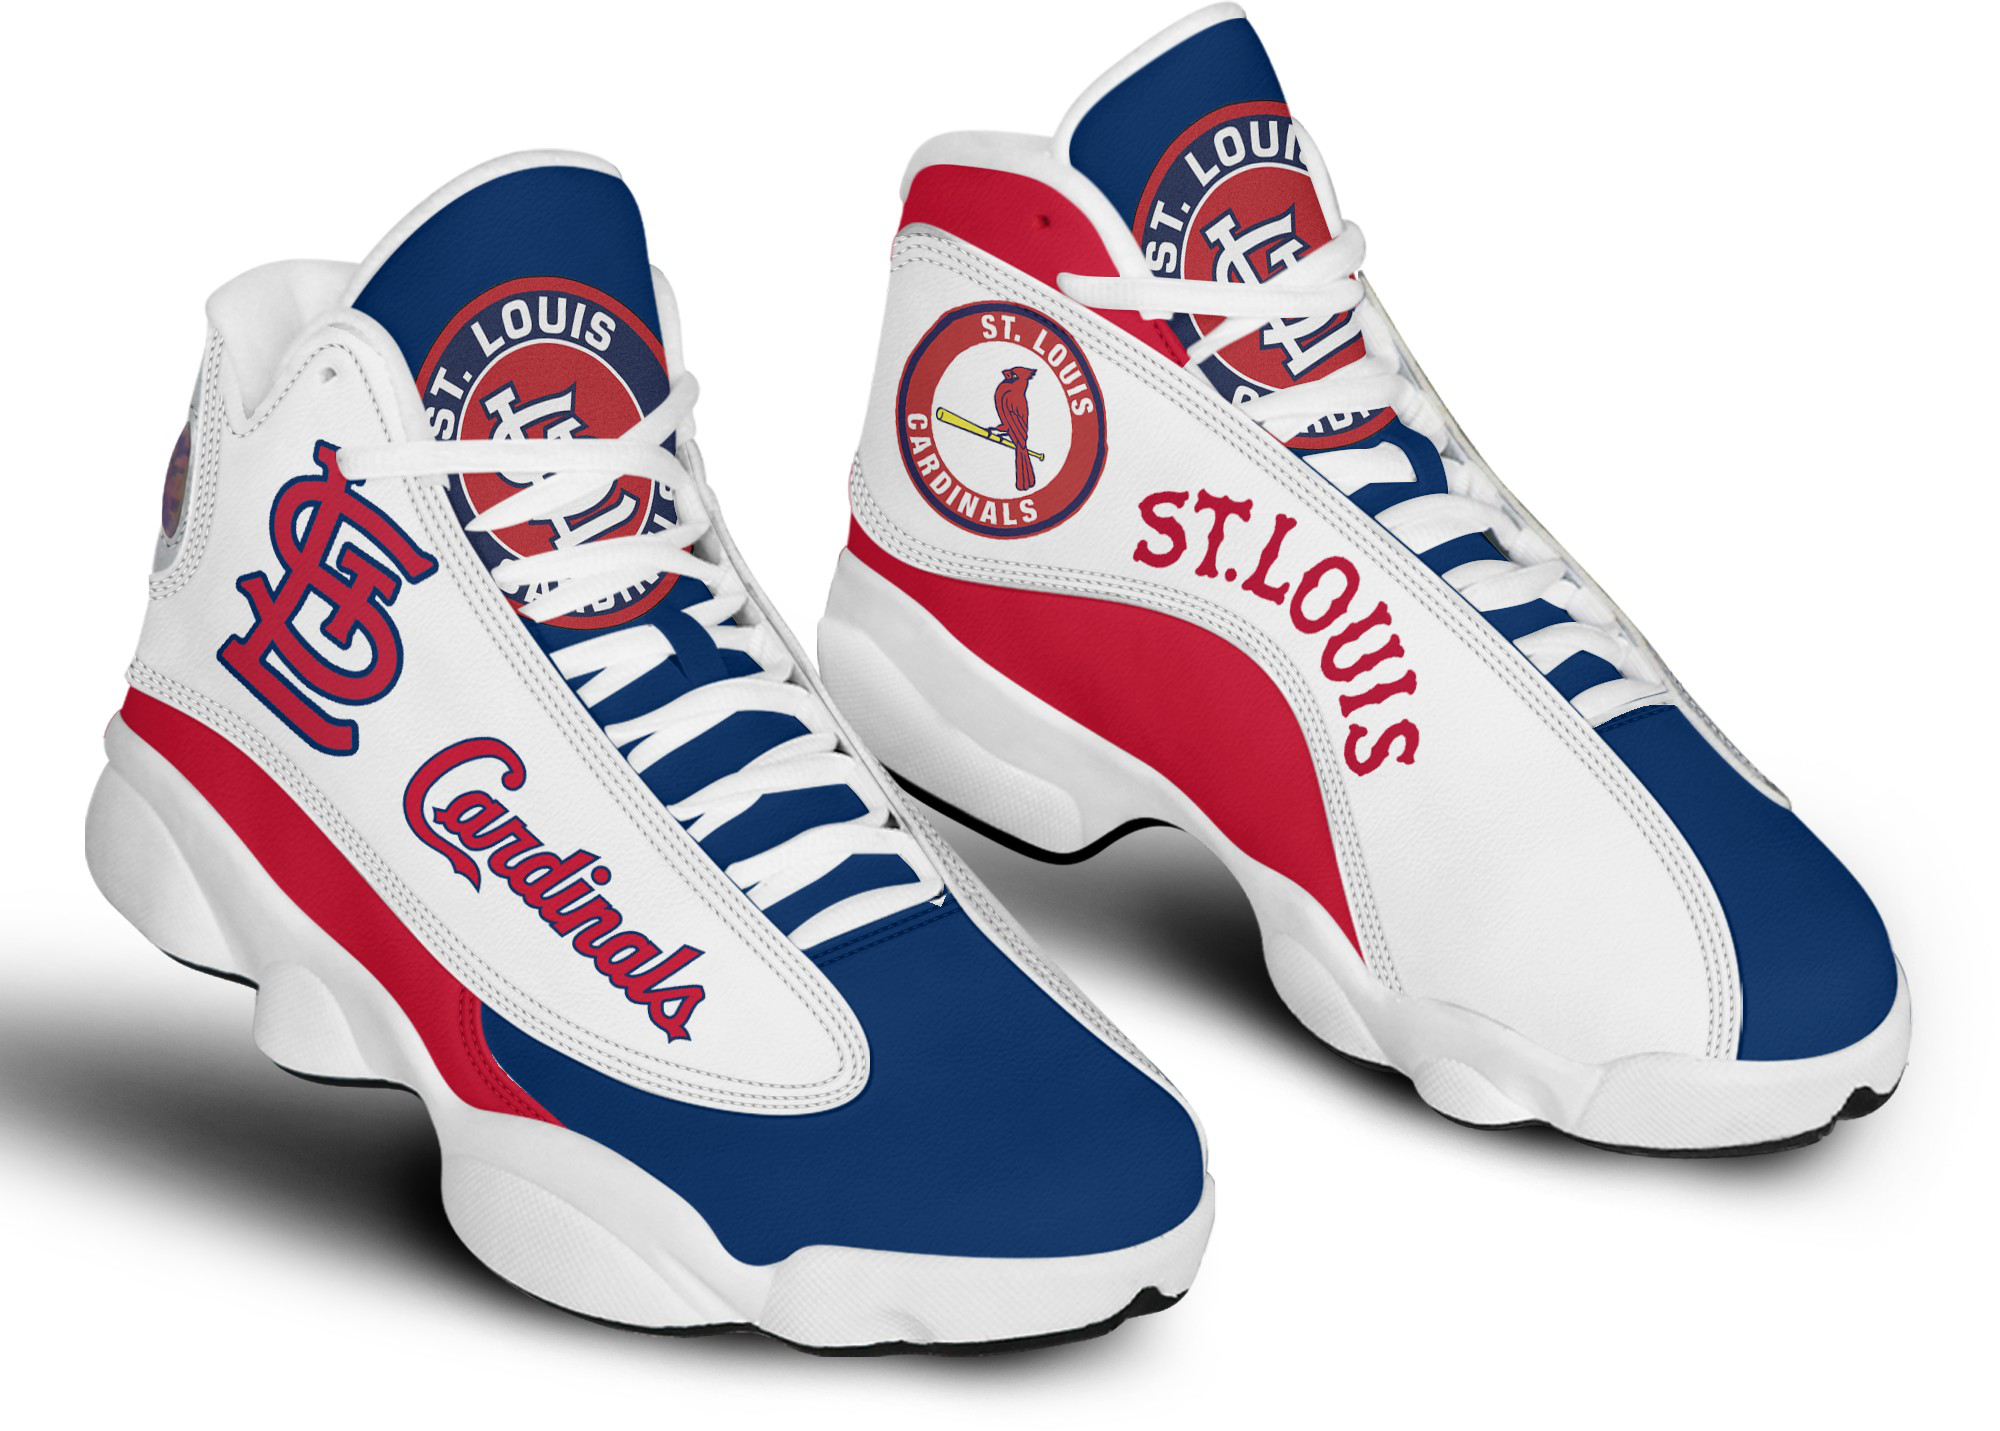 Men's St. Louis Cardinals Limited Edition AJ13 Sneakers 001